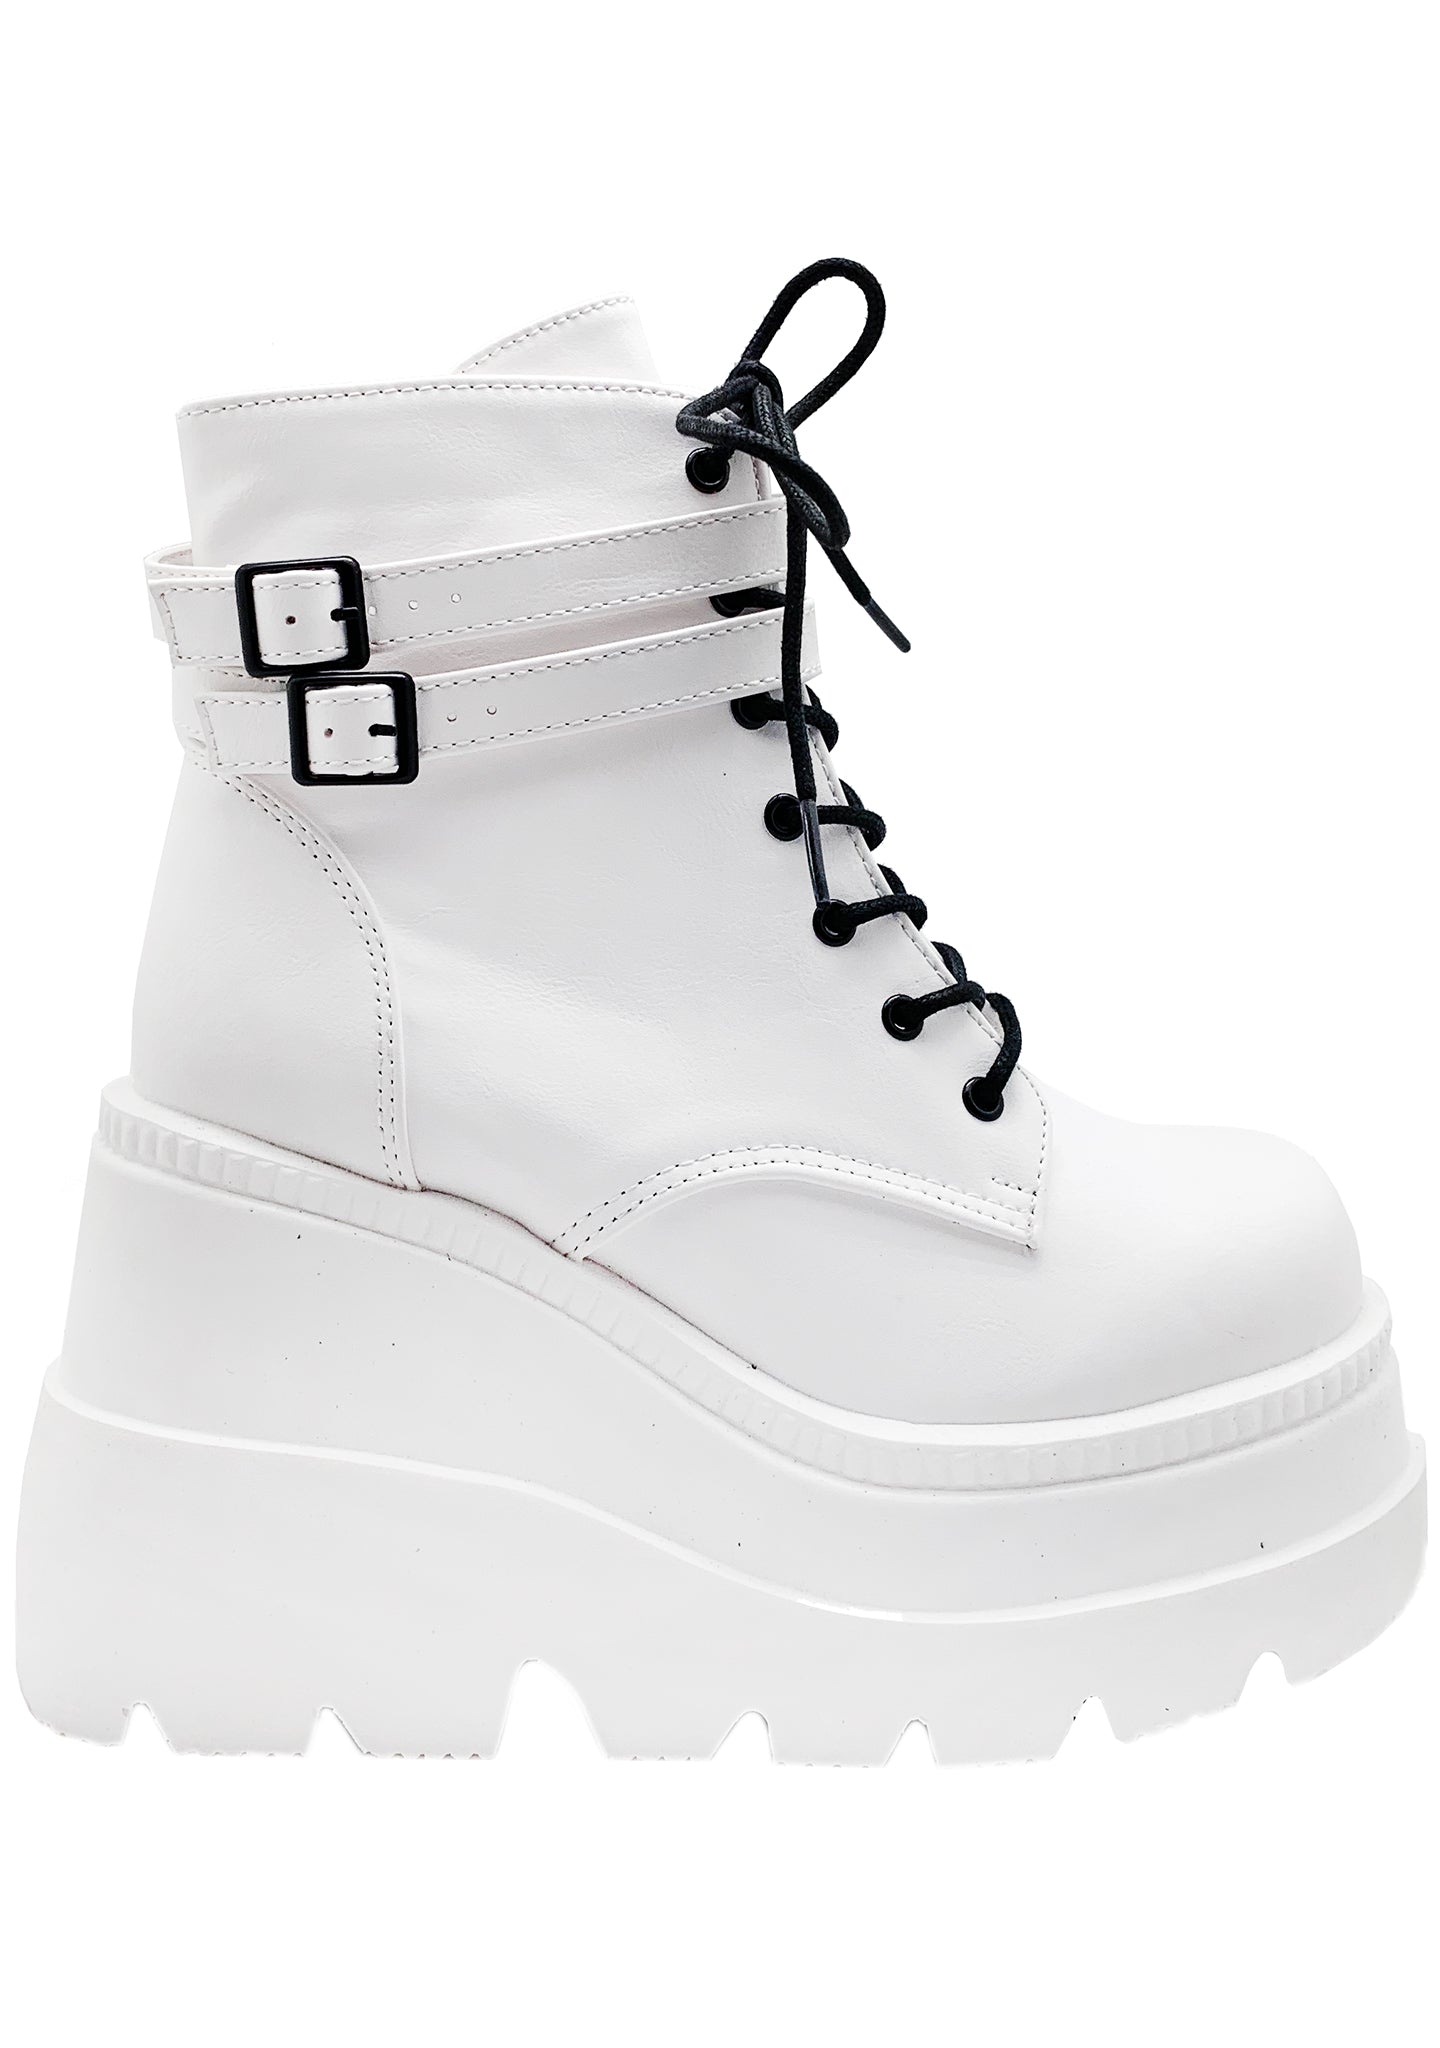 Shop Demonia Shaker Platform Boots in White at LAStyleRush.com – LA ...